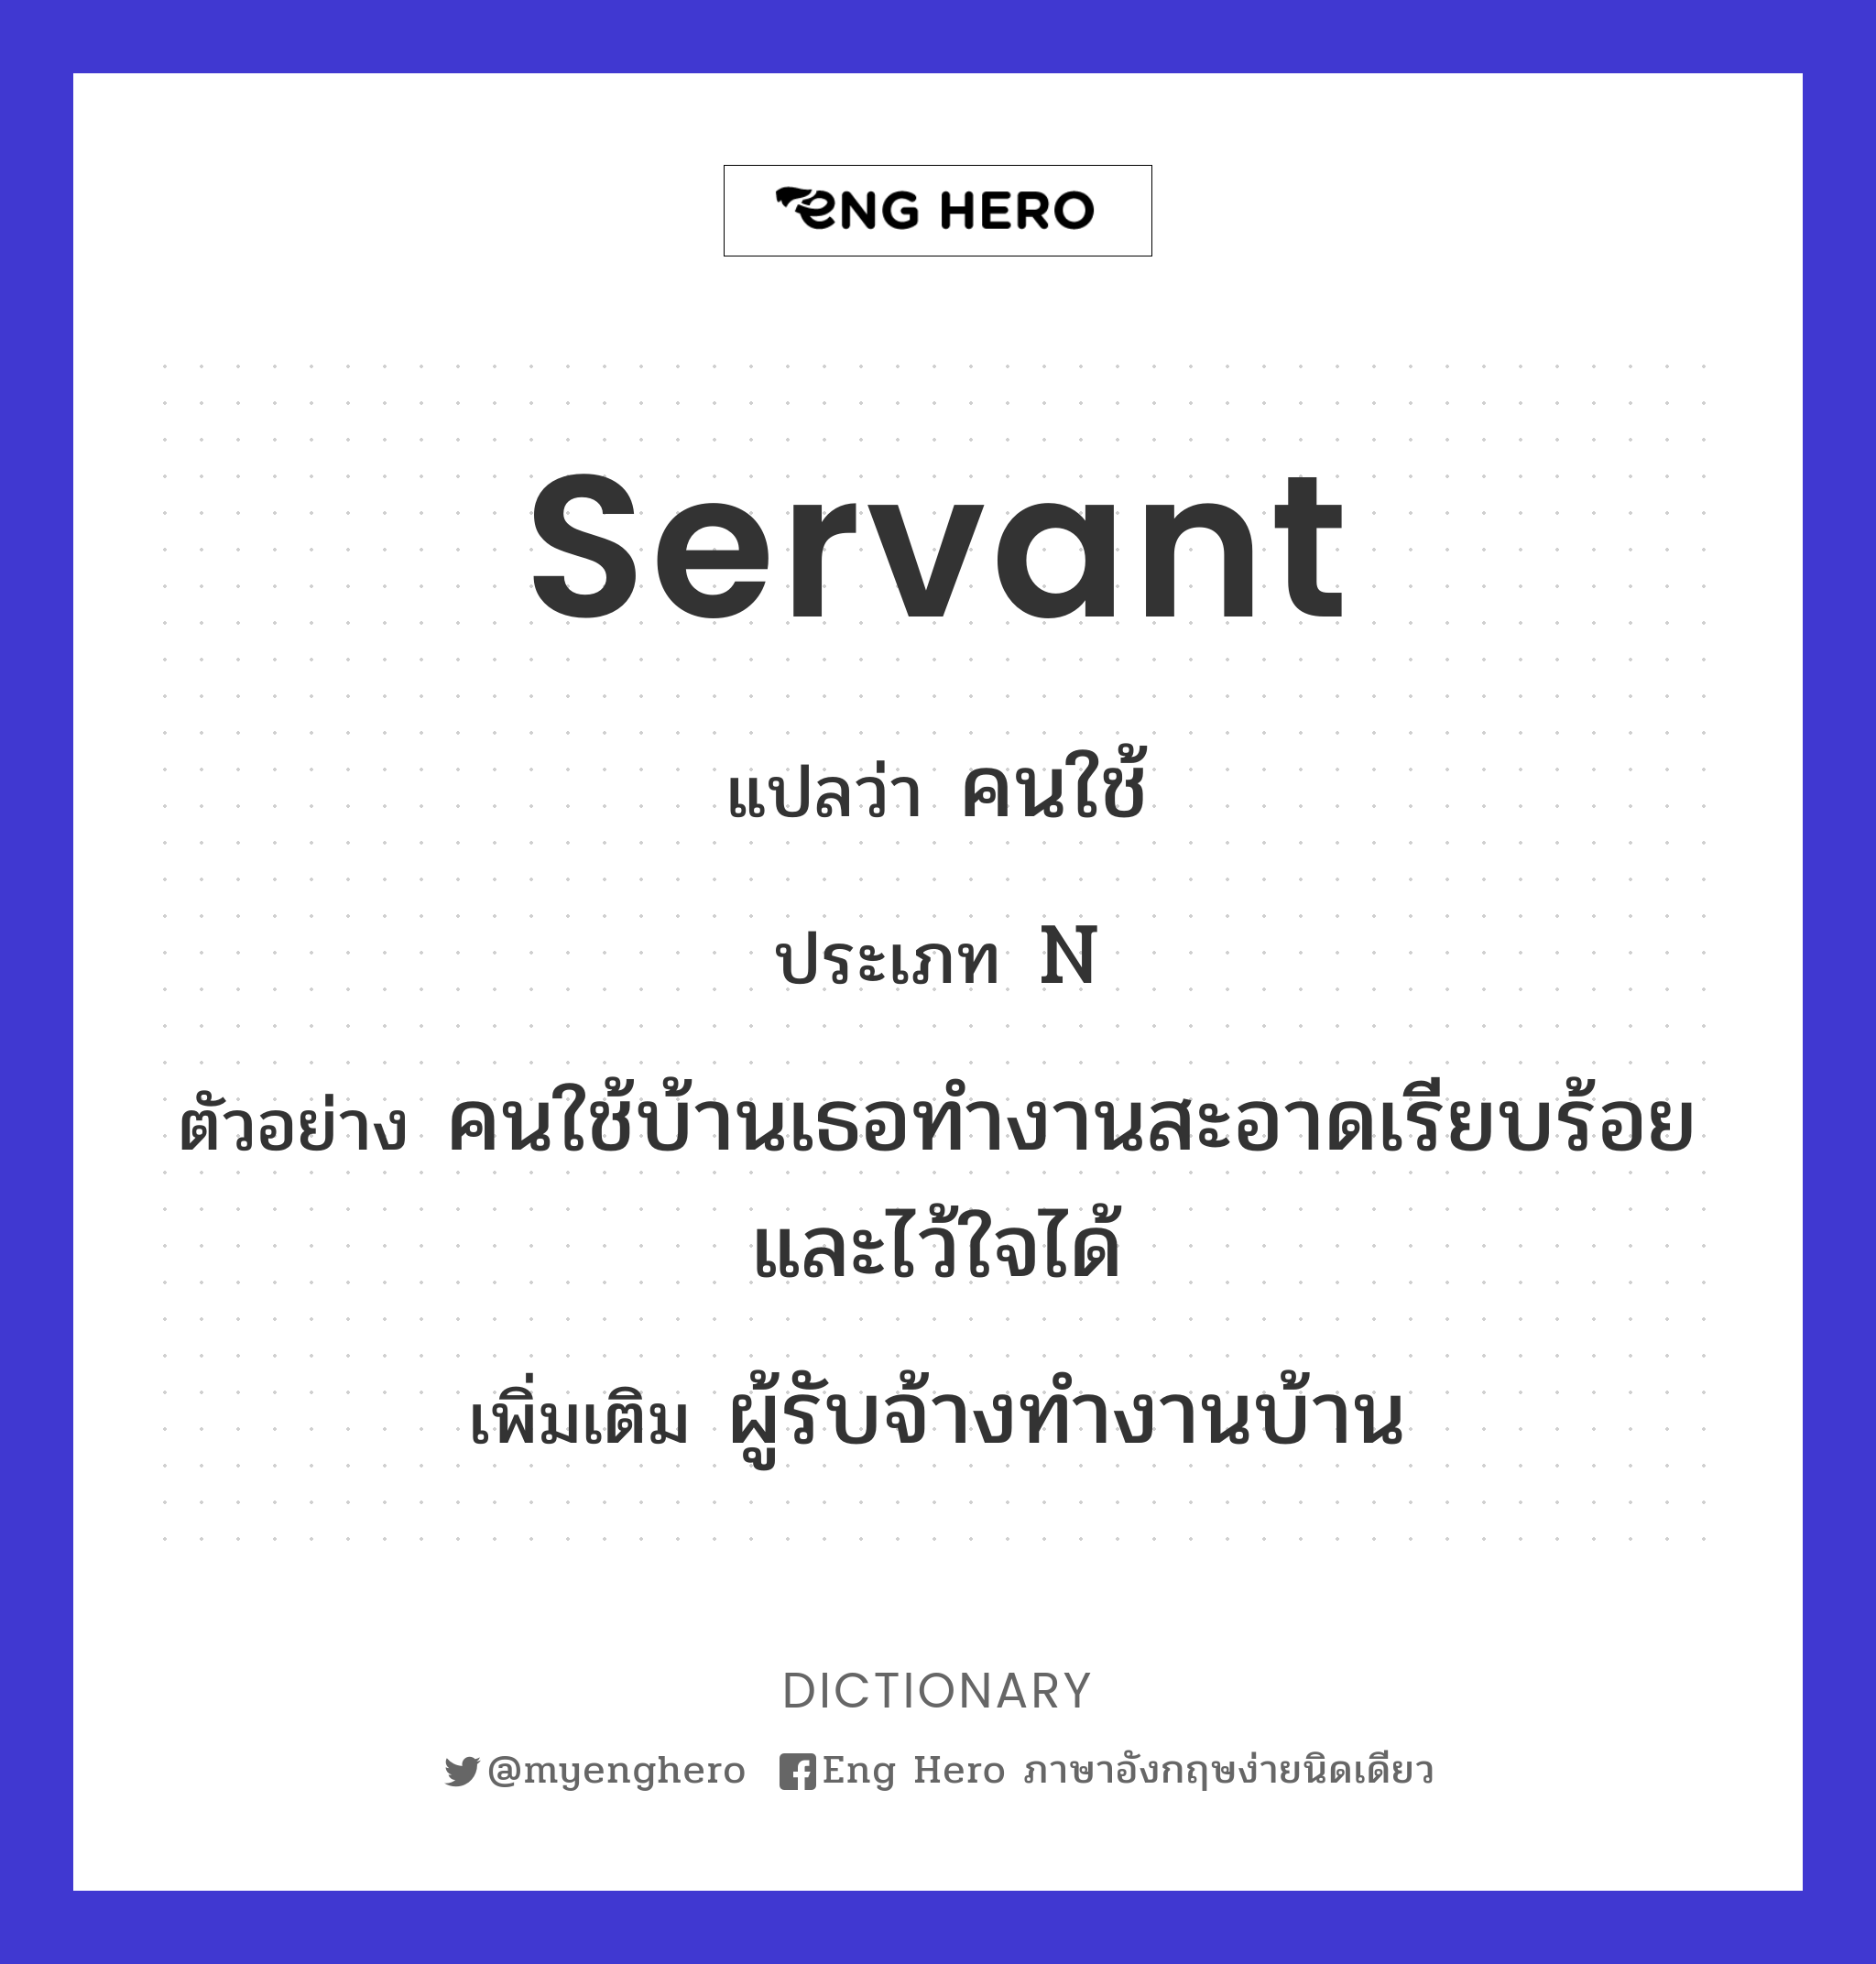 servant